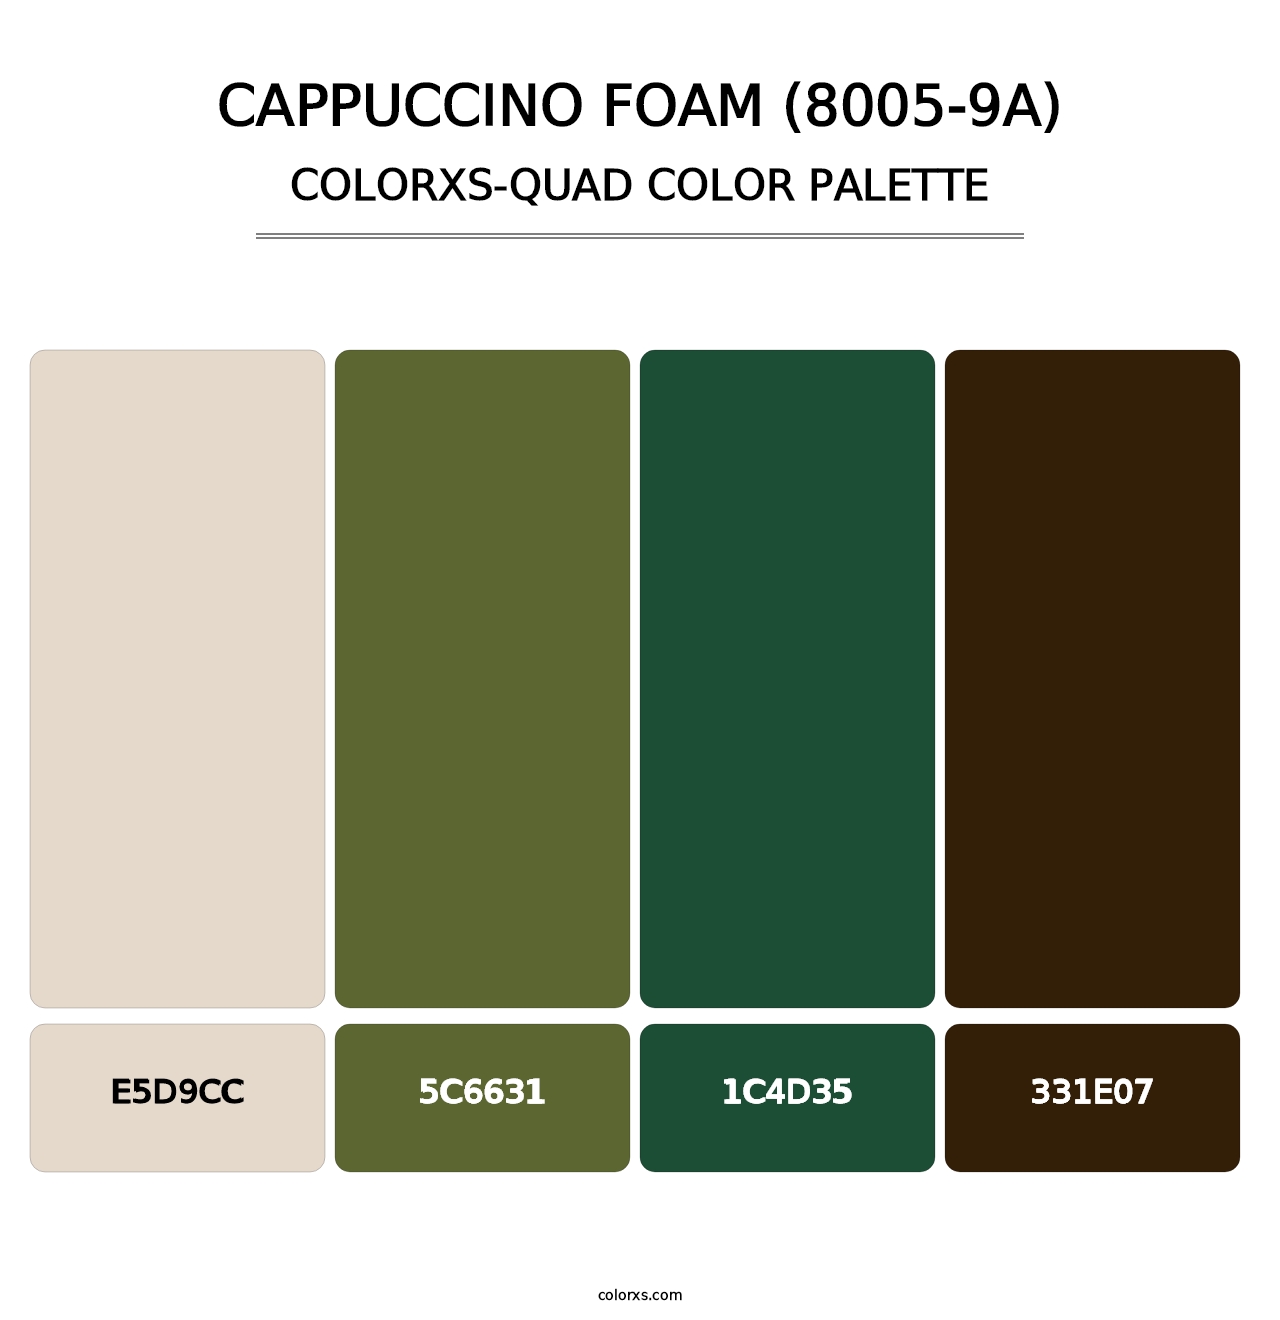 Cappuccino Foam (8005-9A) - Colorxs Quad Palette